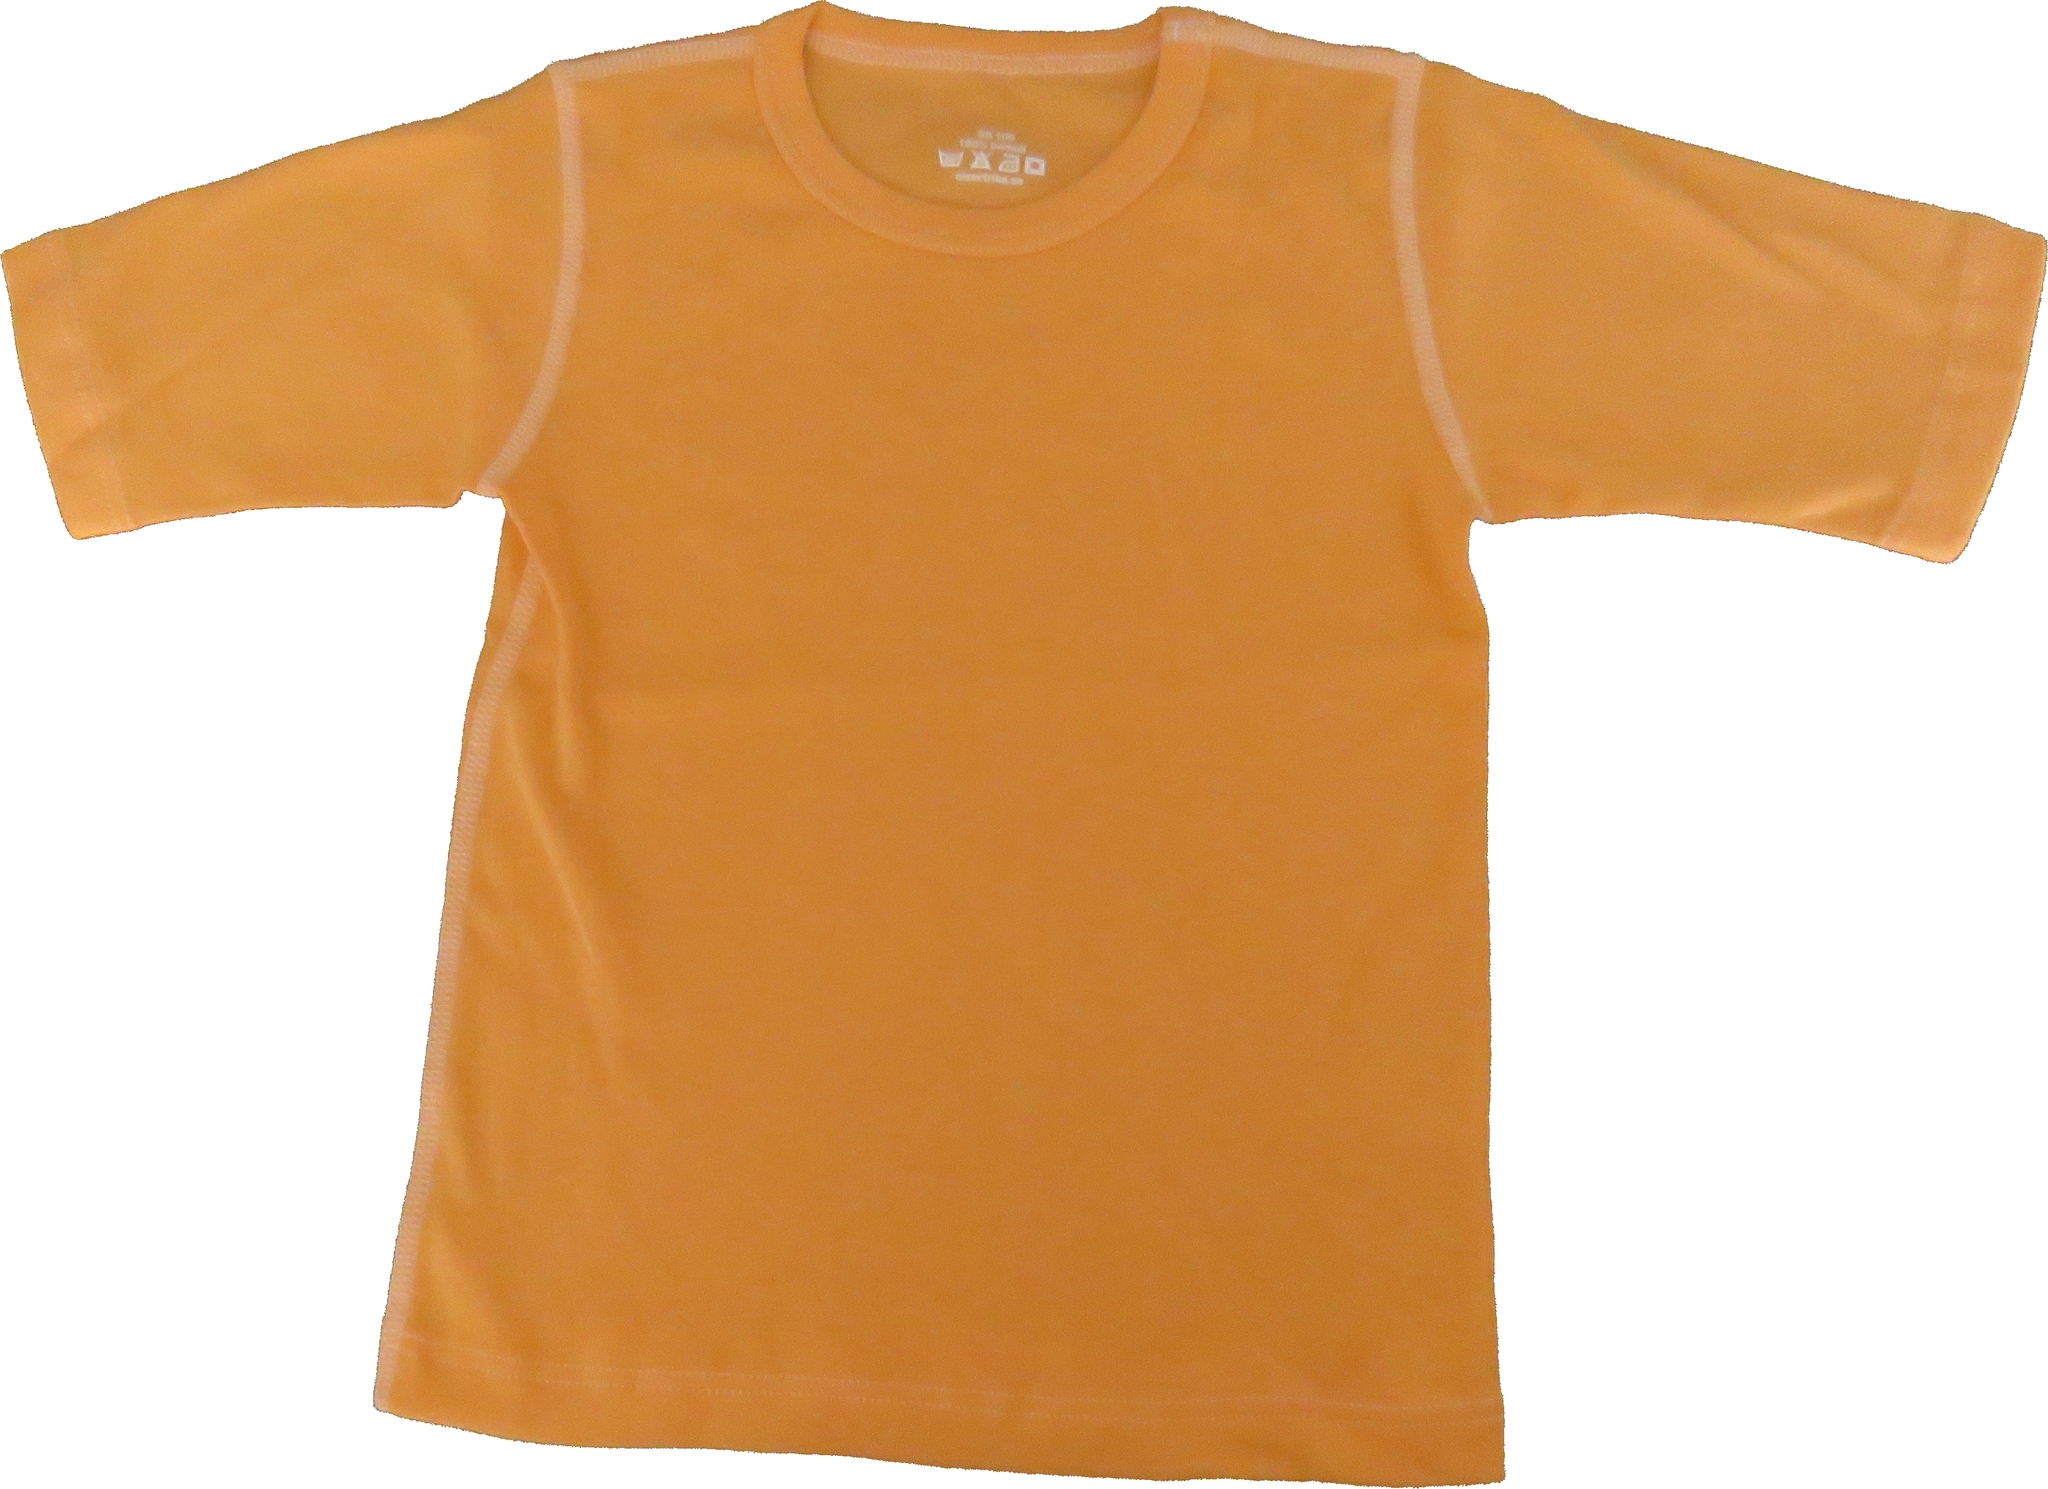 Basic t-shirt kortärmad ljusorange 80-110cl